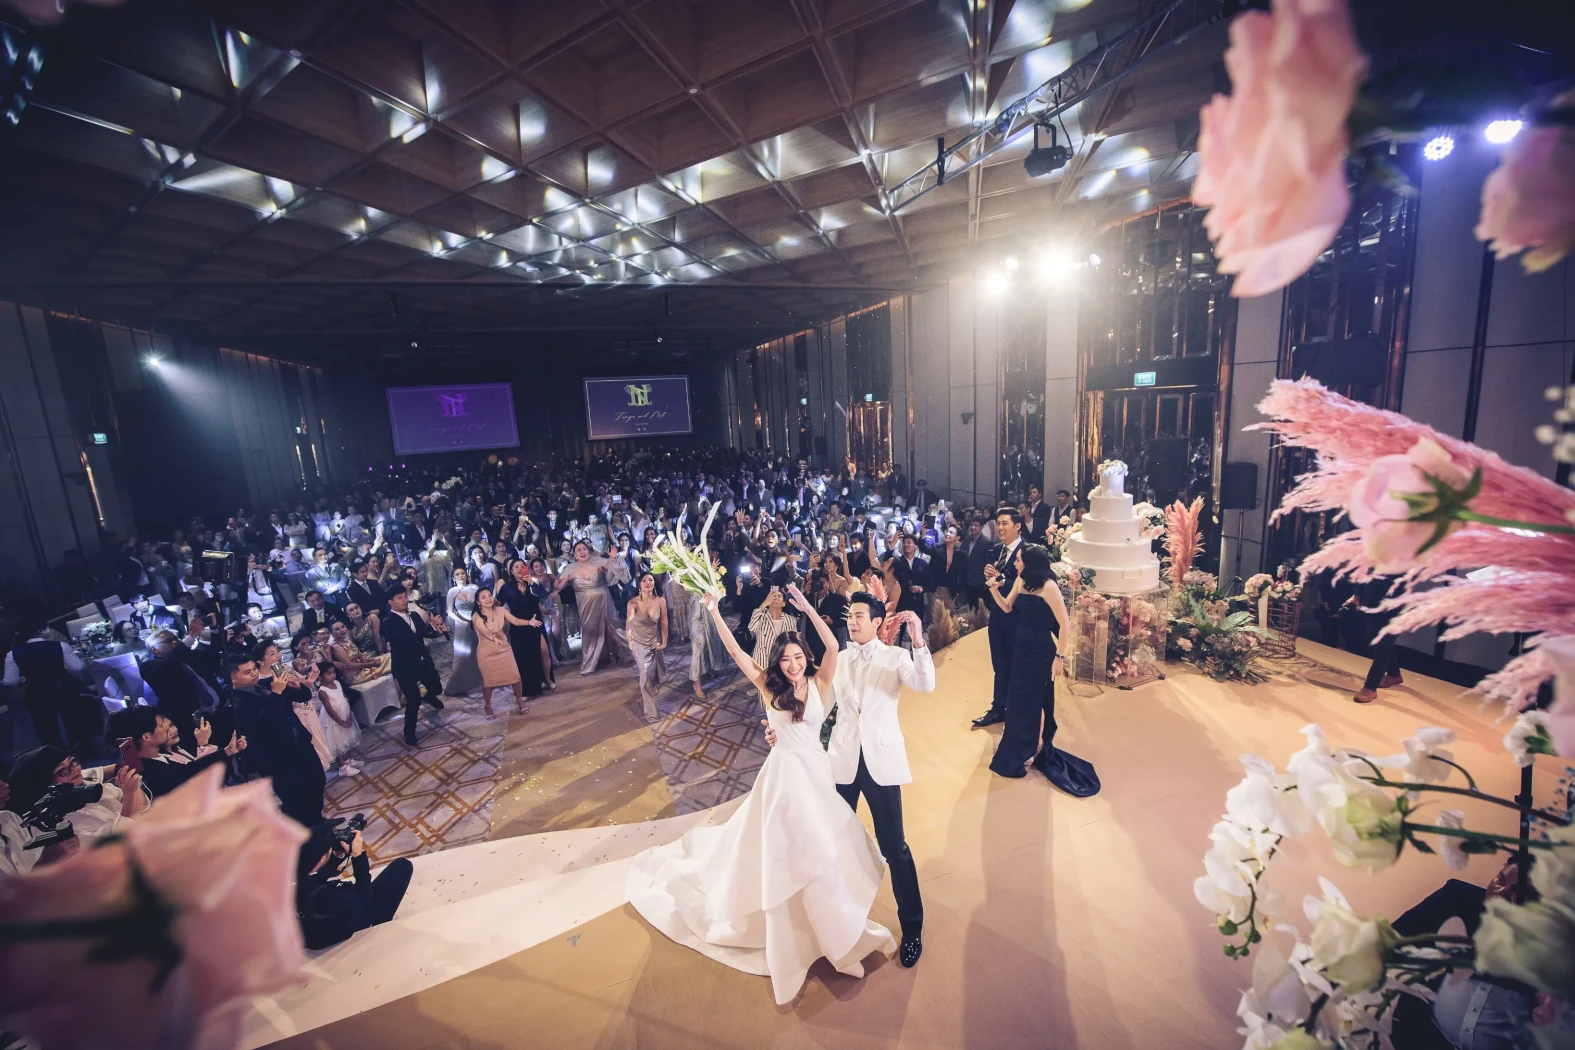 A wedding in a spacious ballroom at Hyatt Regency Bangkok hotel in Thailand